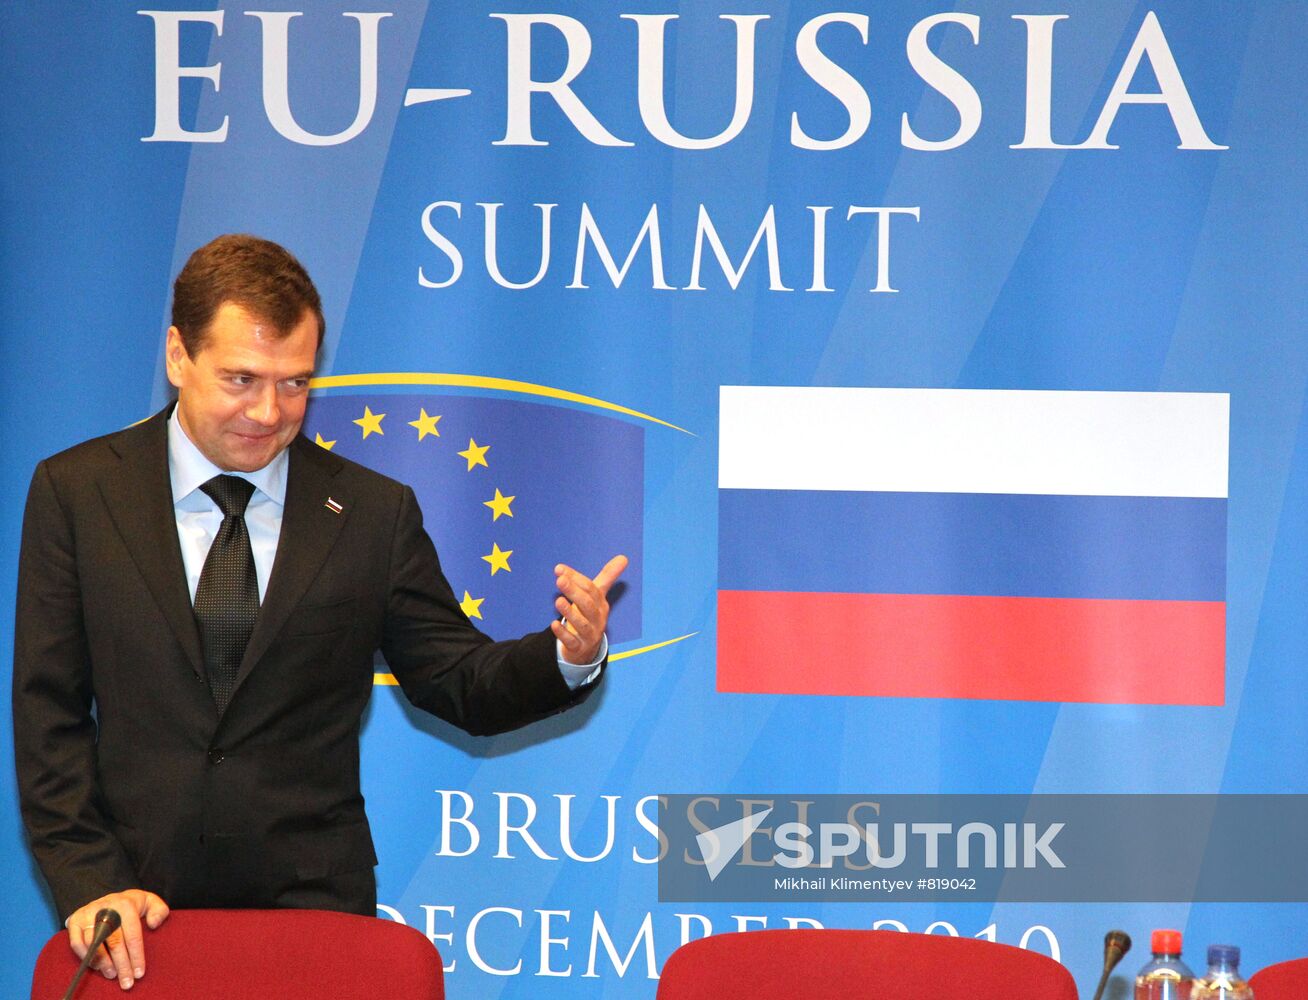 Dmitry Medvedev at Russia-EU summit in Brussels